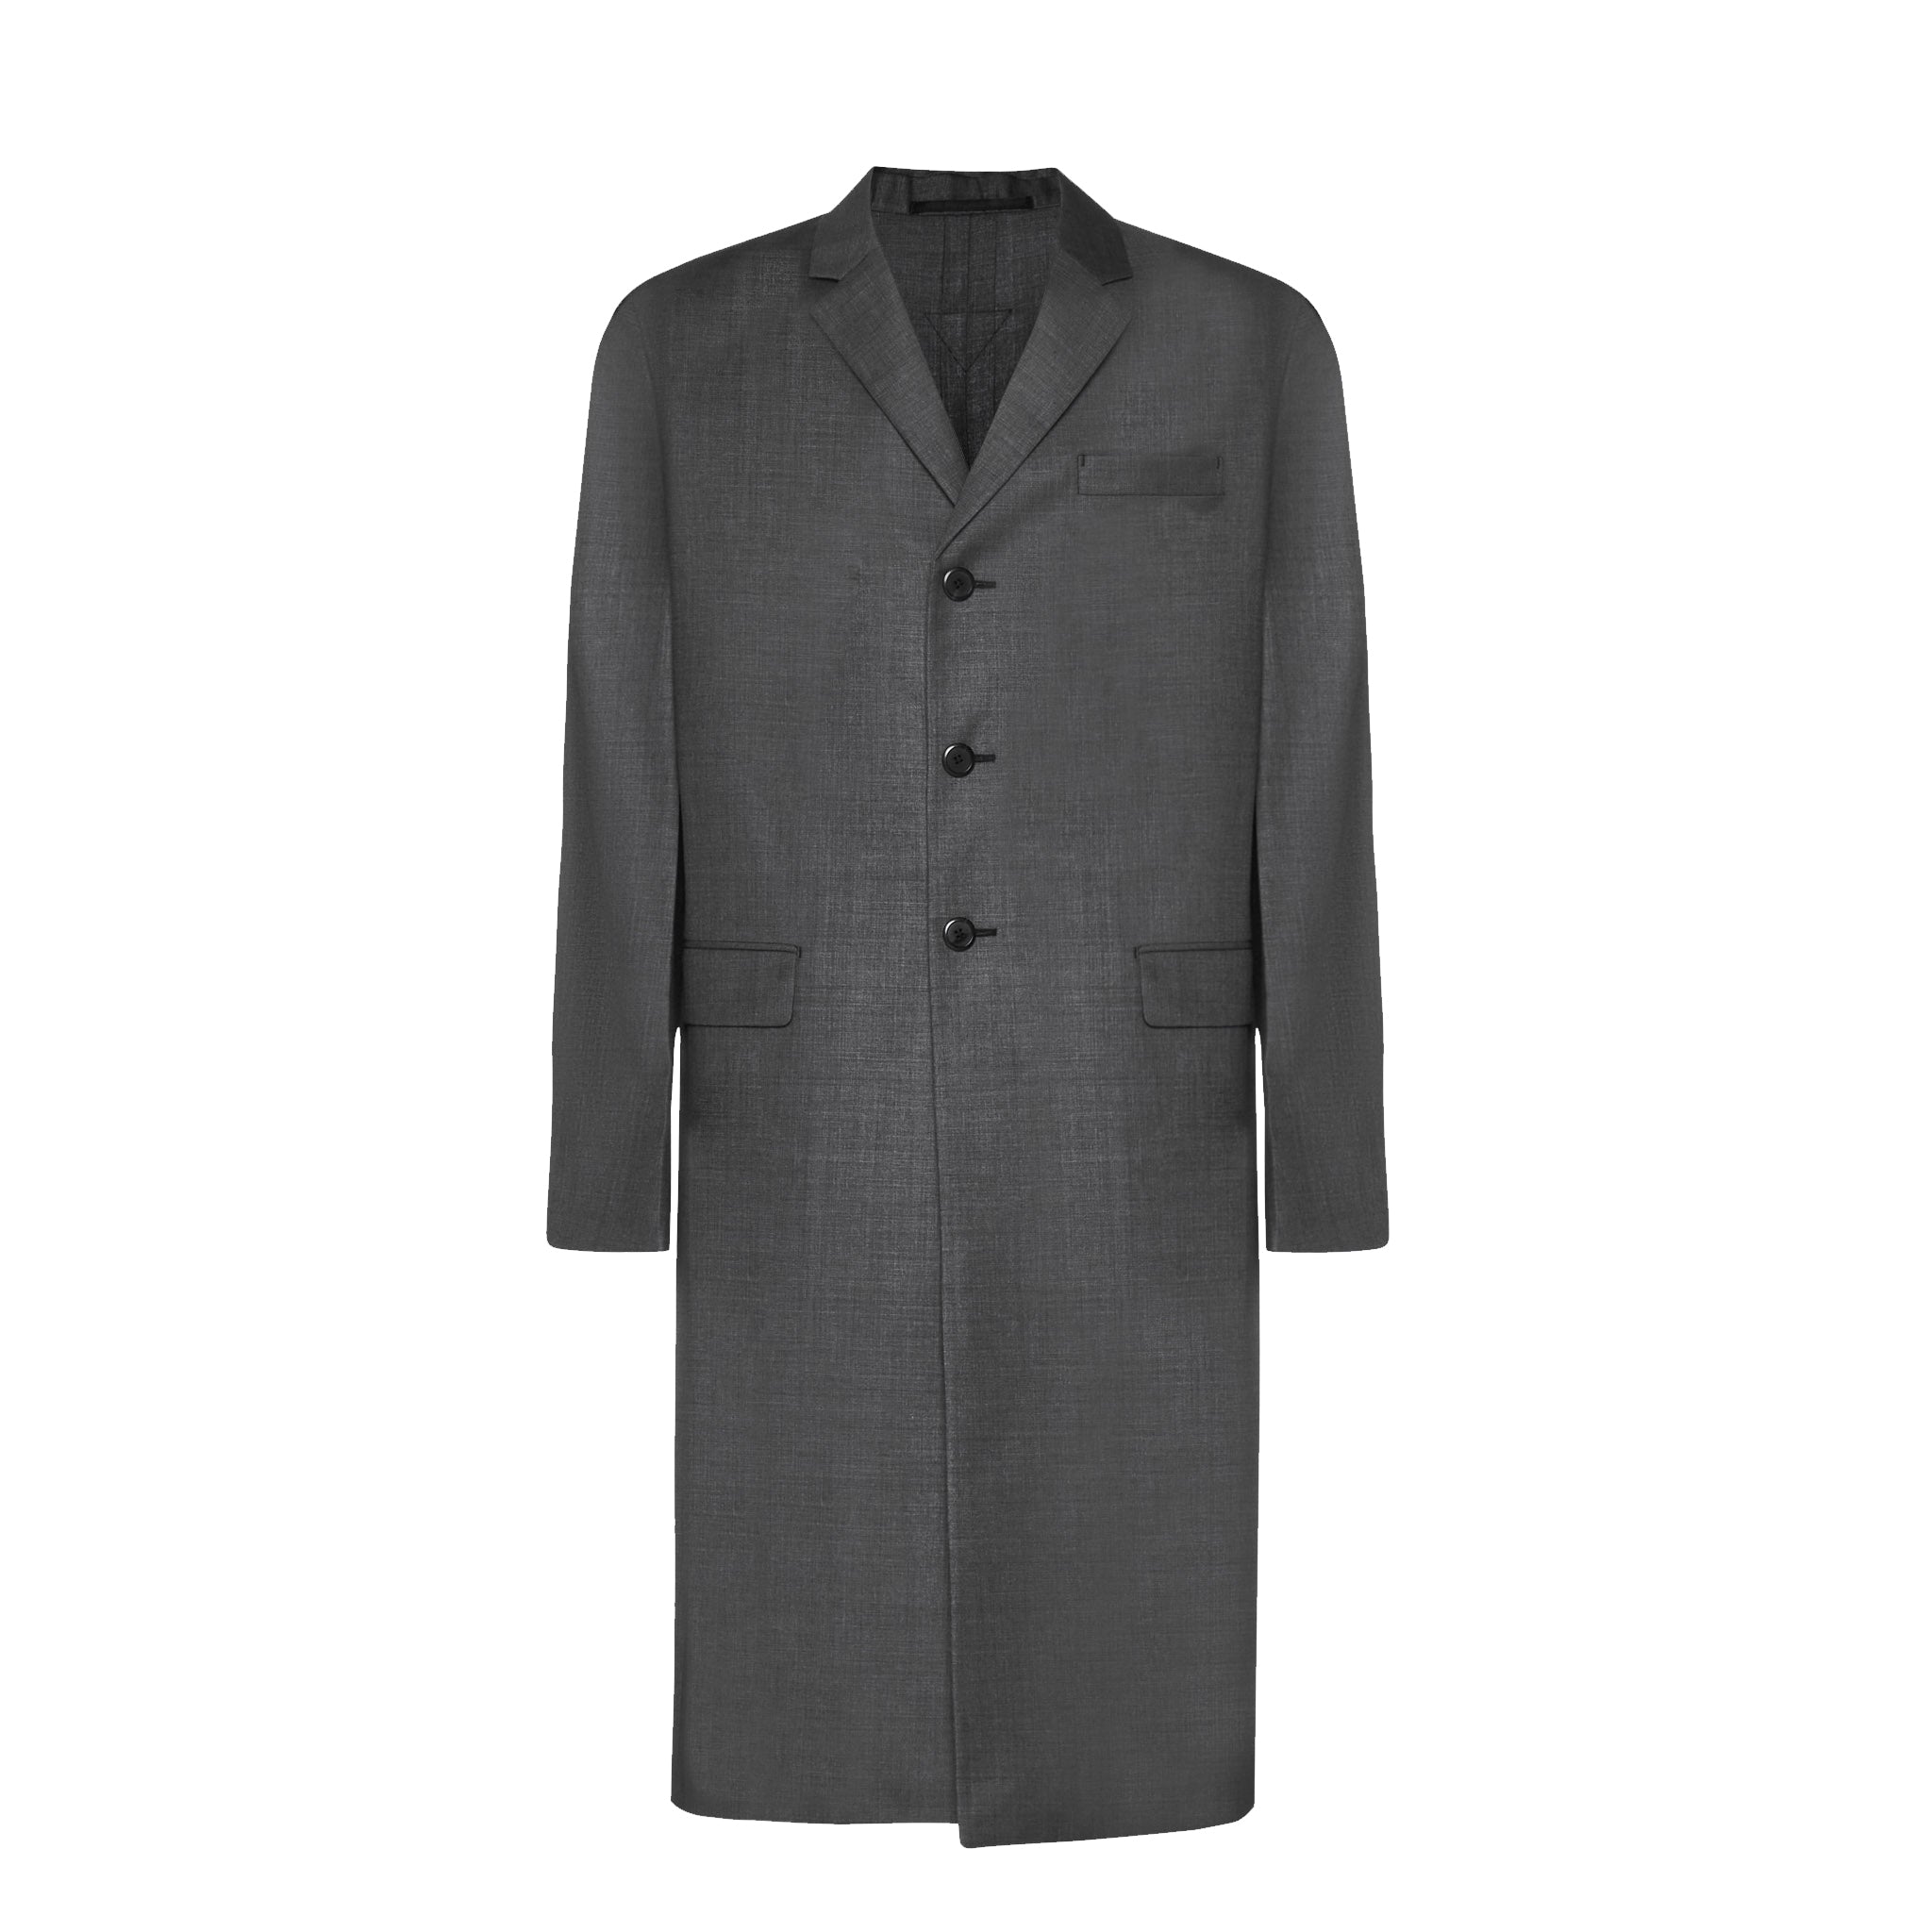 PRADA-Outlet-Sale-Prada Wool Coat-MEN CLOTHING-ARCHIVIST